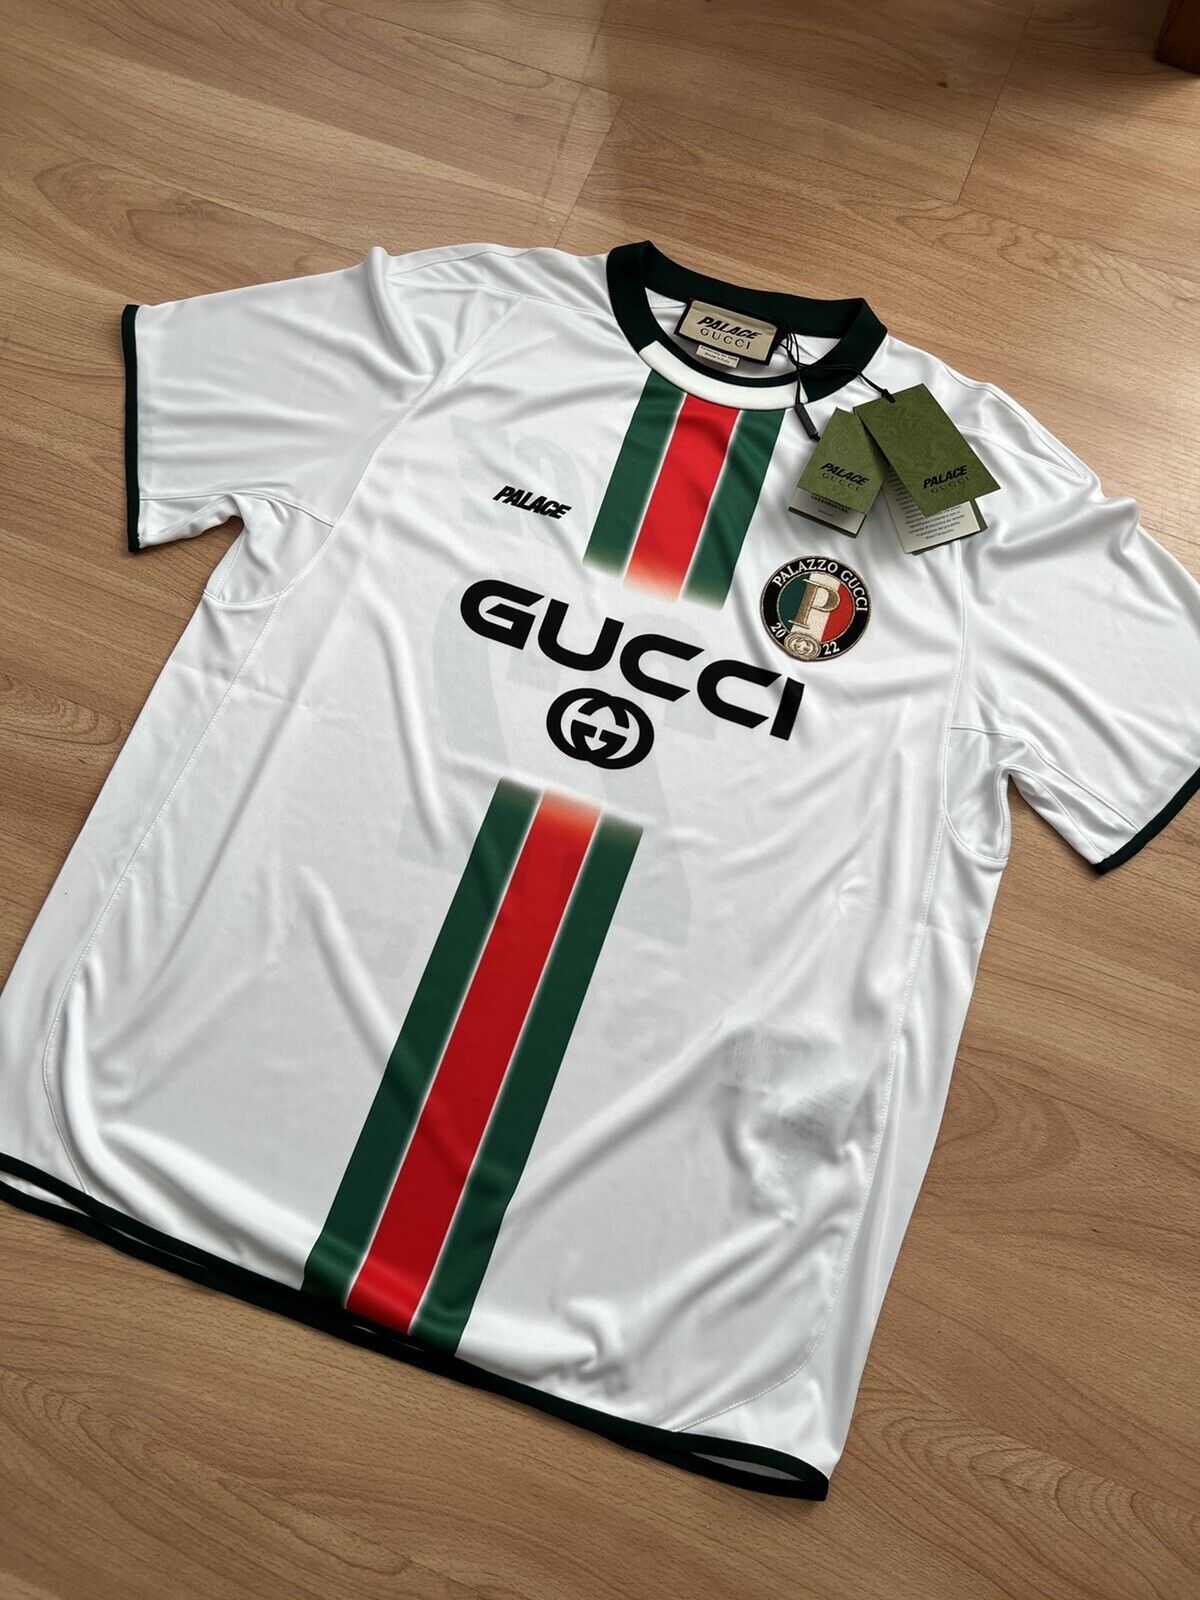 er mere end tragt Dyrt gucci x palace Printed football top technical jersey T-shirt size medium |  eBay